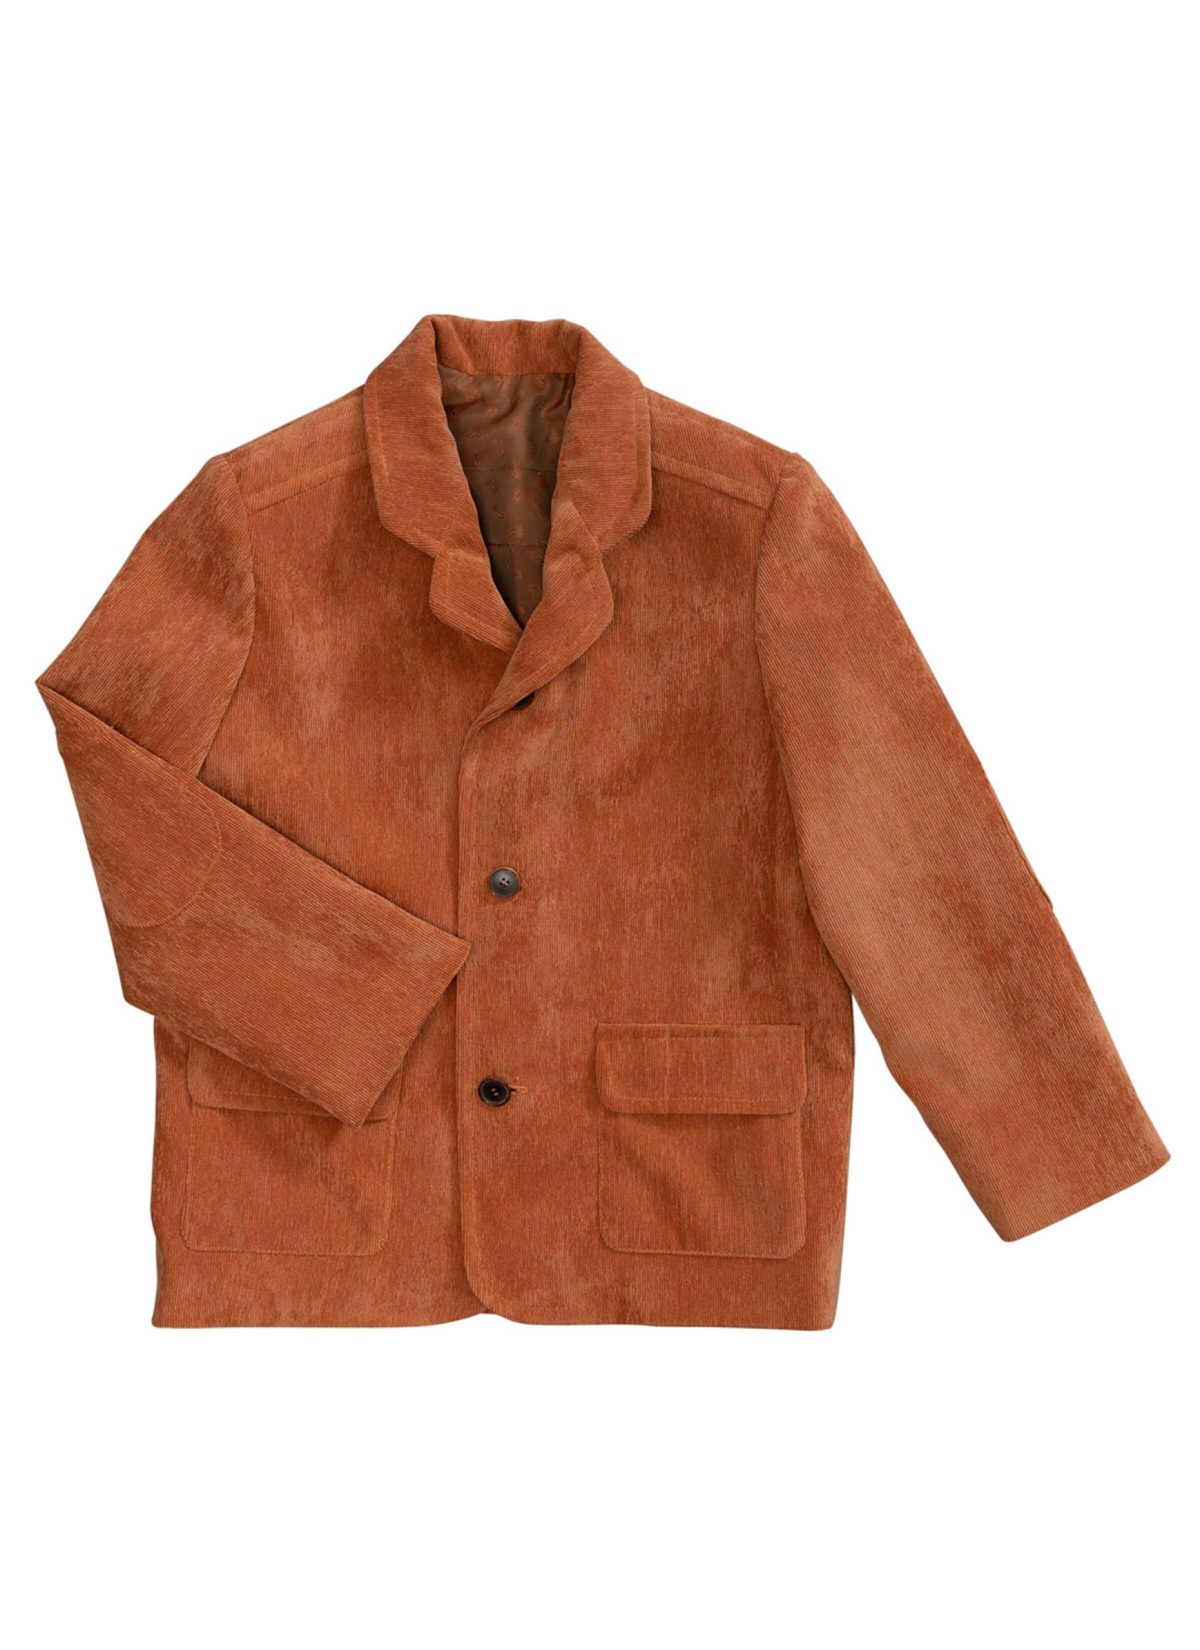 Burda Style Pattern B9234 Children's Jacket & Waistcoat